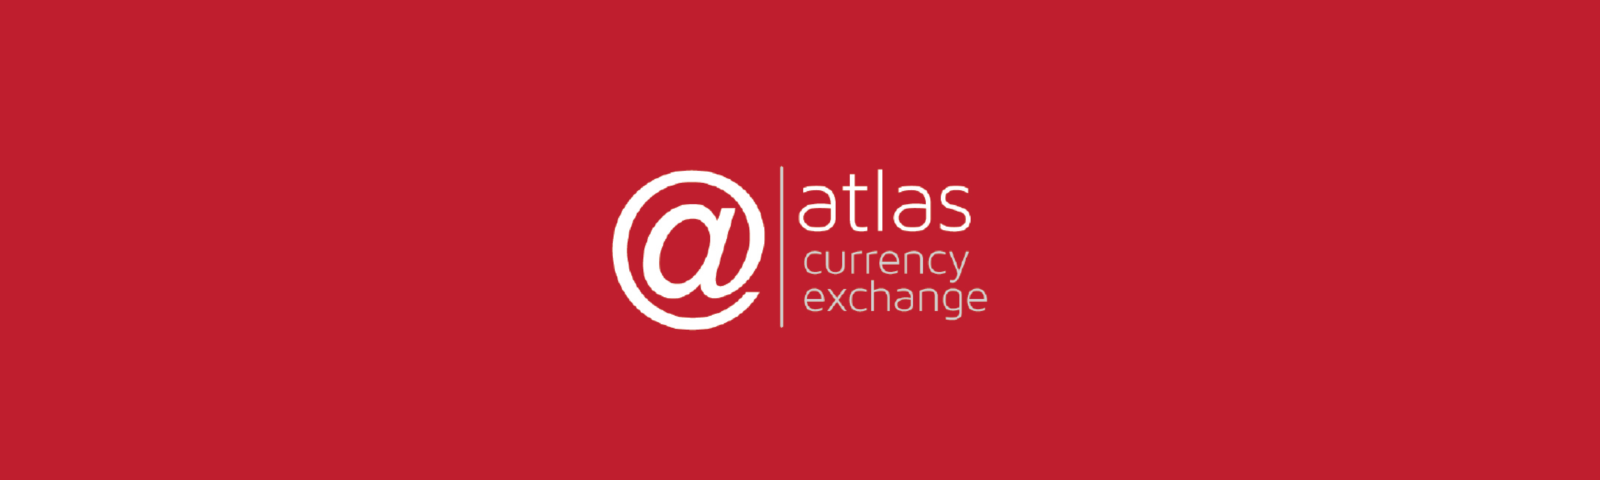 Atlas Currency Exchange